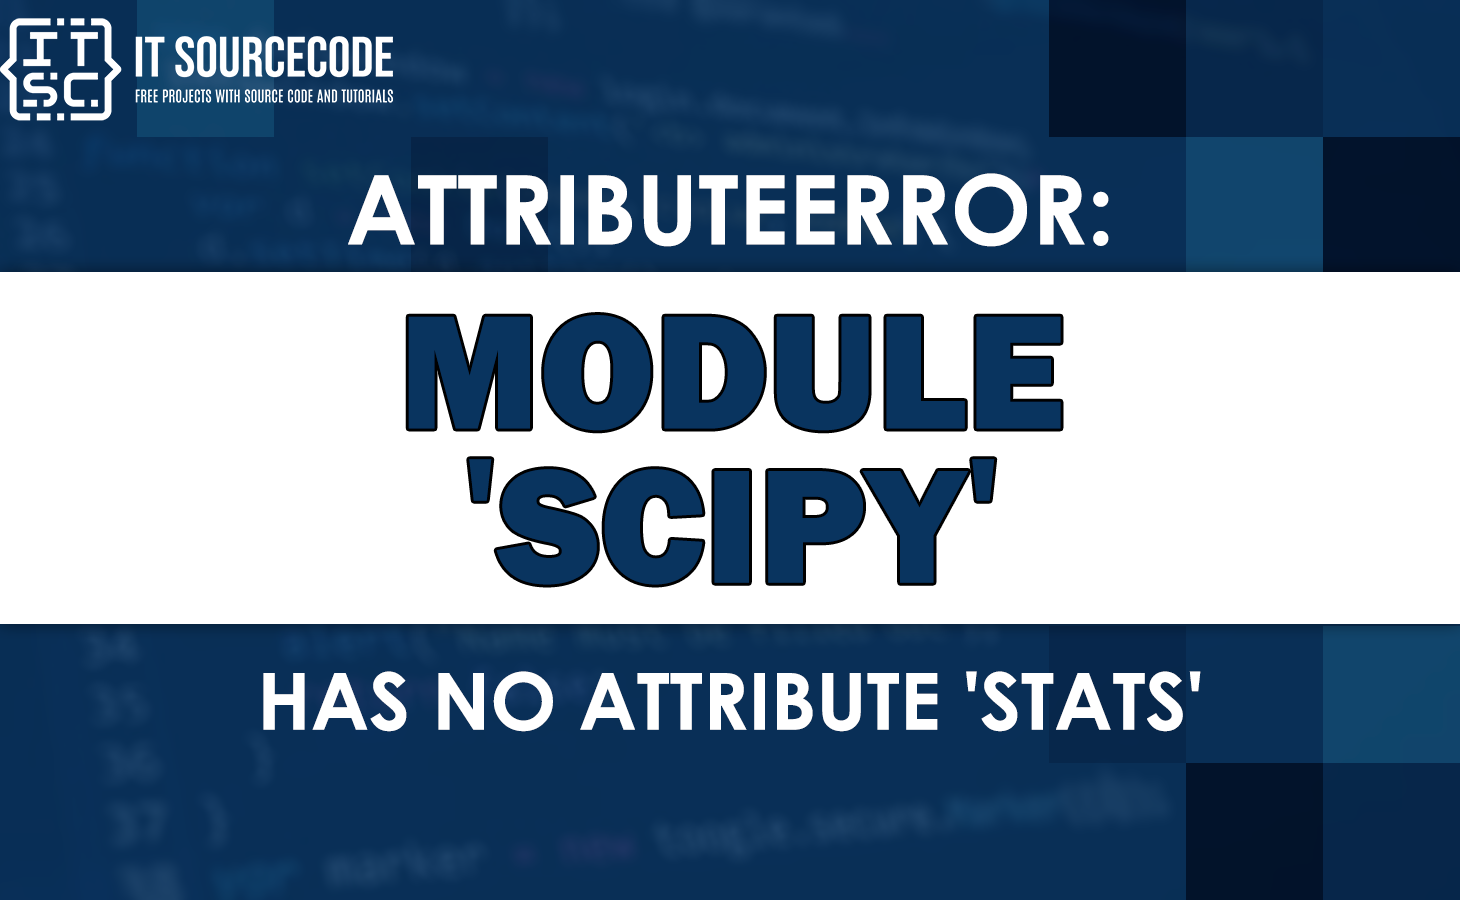 Attributeerror: module scipy has no attribute stats